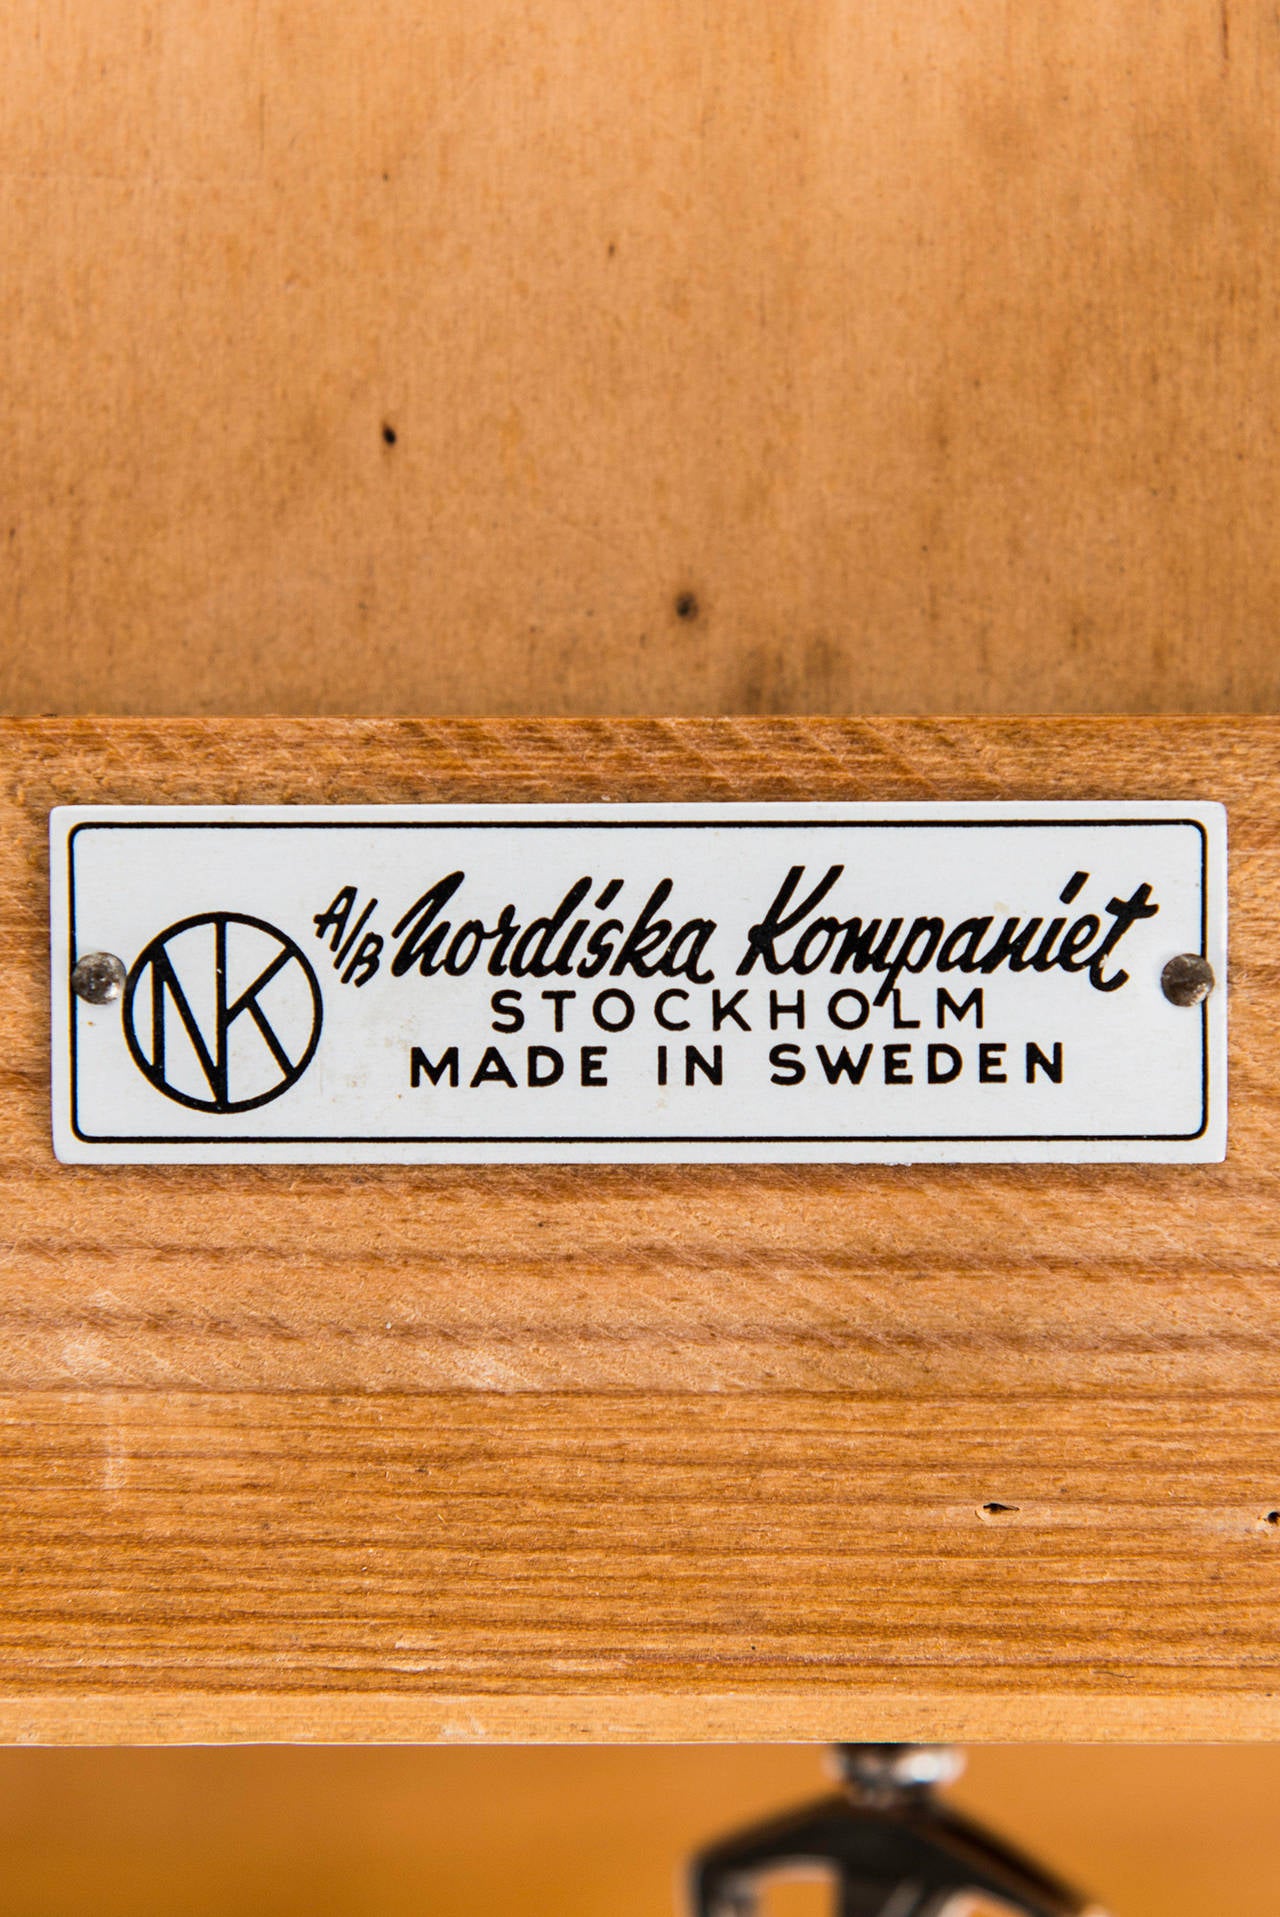 Pair of Freestanding Bedside Tables by Nordiska Kompaniet in Sweden 1